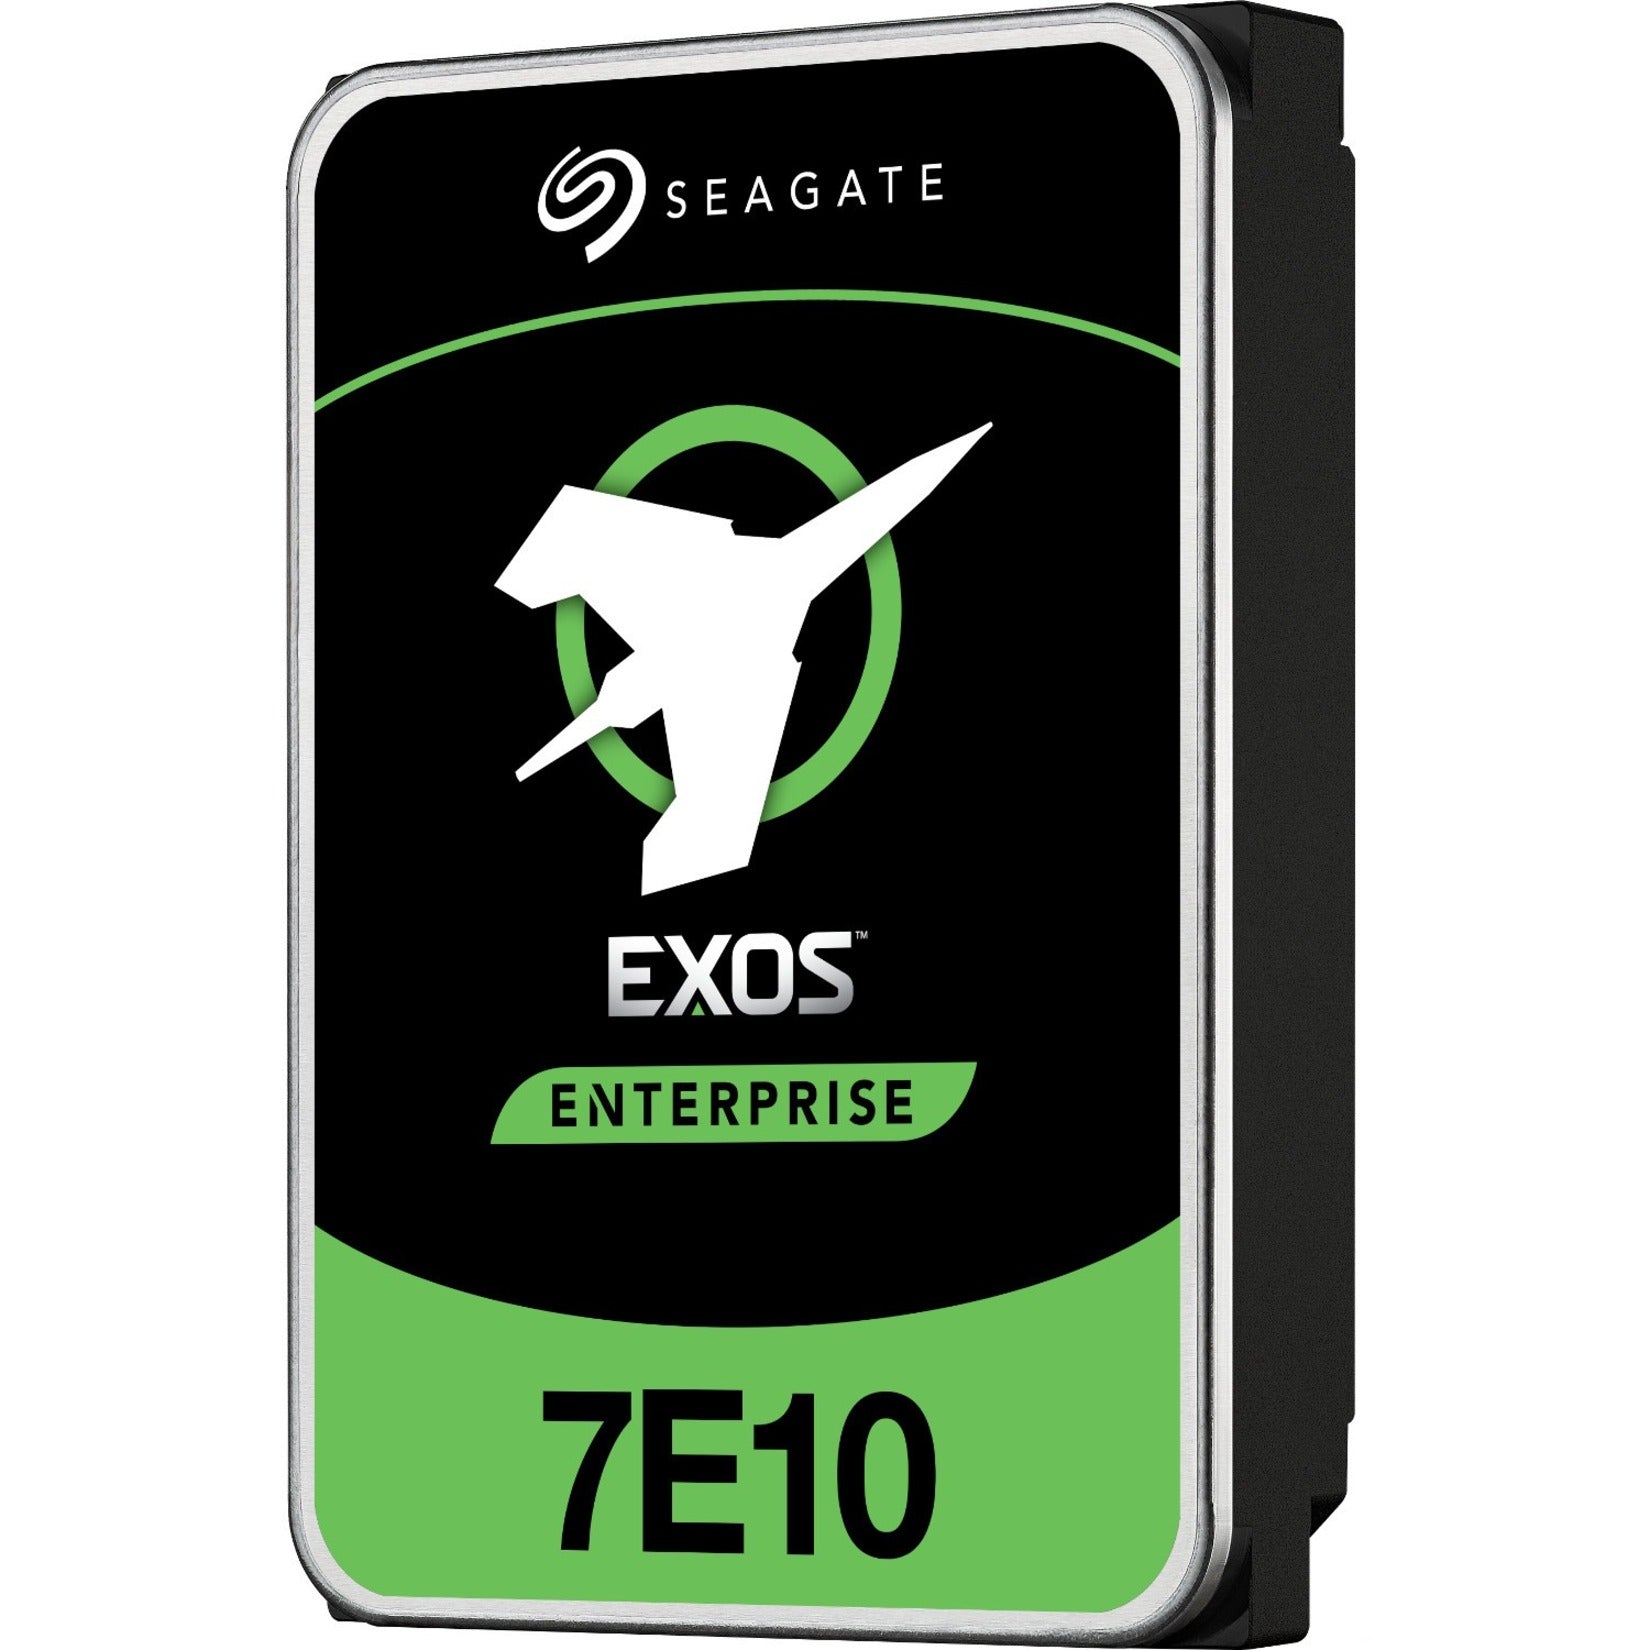 Seagate-IMSourcing ST8000NM018B Exos 7E10 8TB Internal Enterprise Hard Drive, 7200 RPM, 12Gb/s SAS, 512e/4Kn, 256MB Buffer